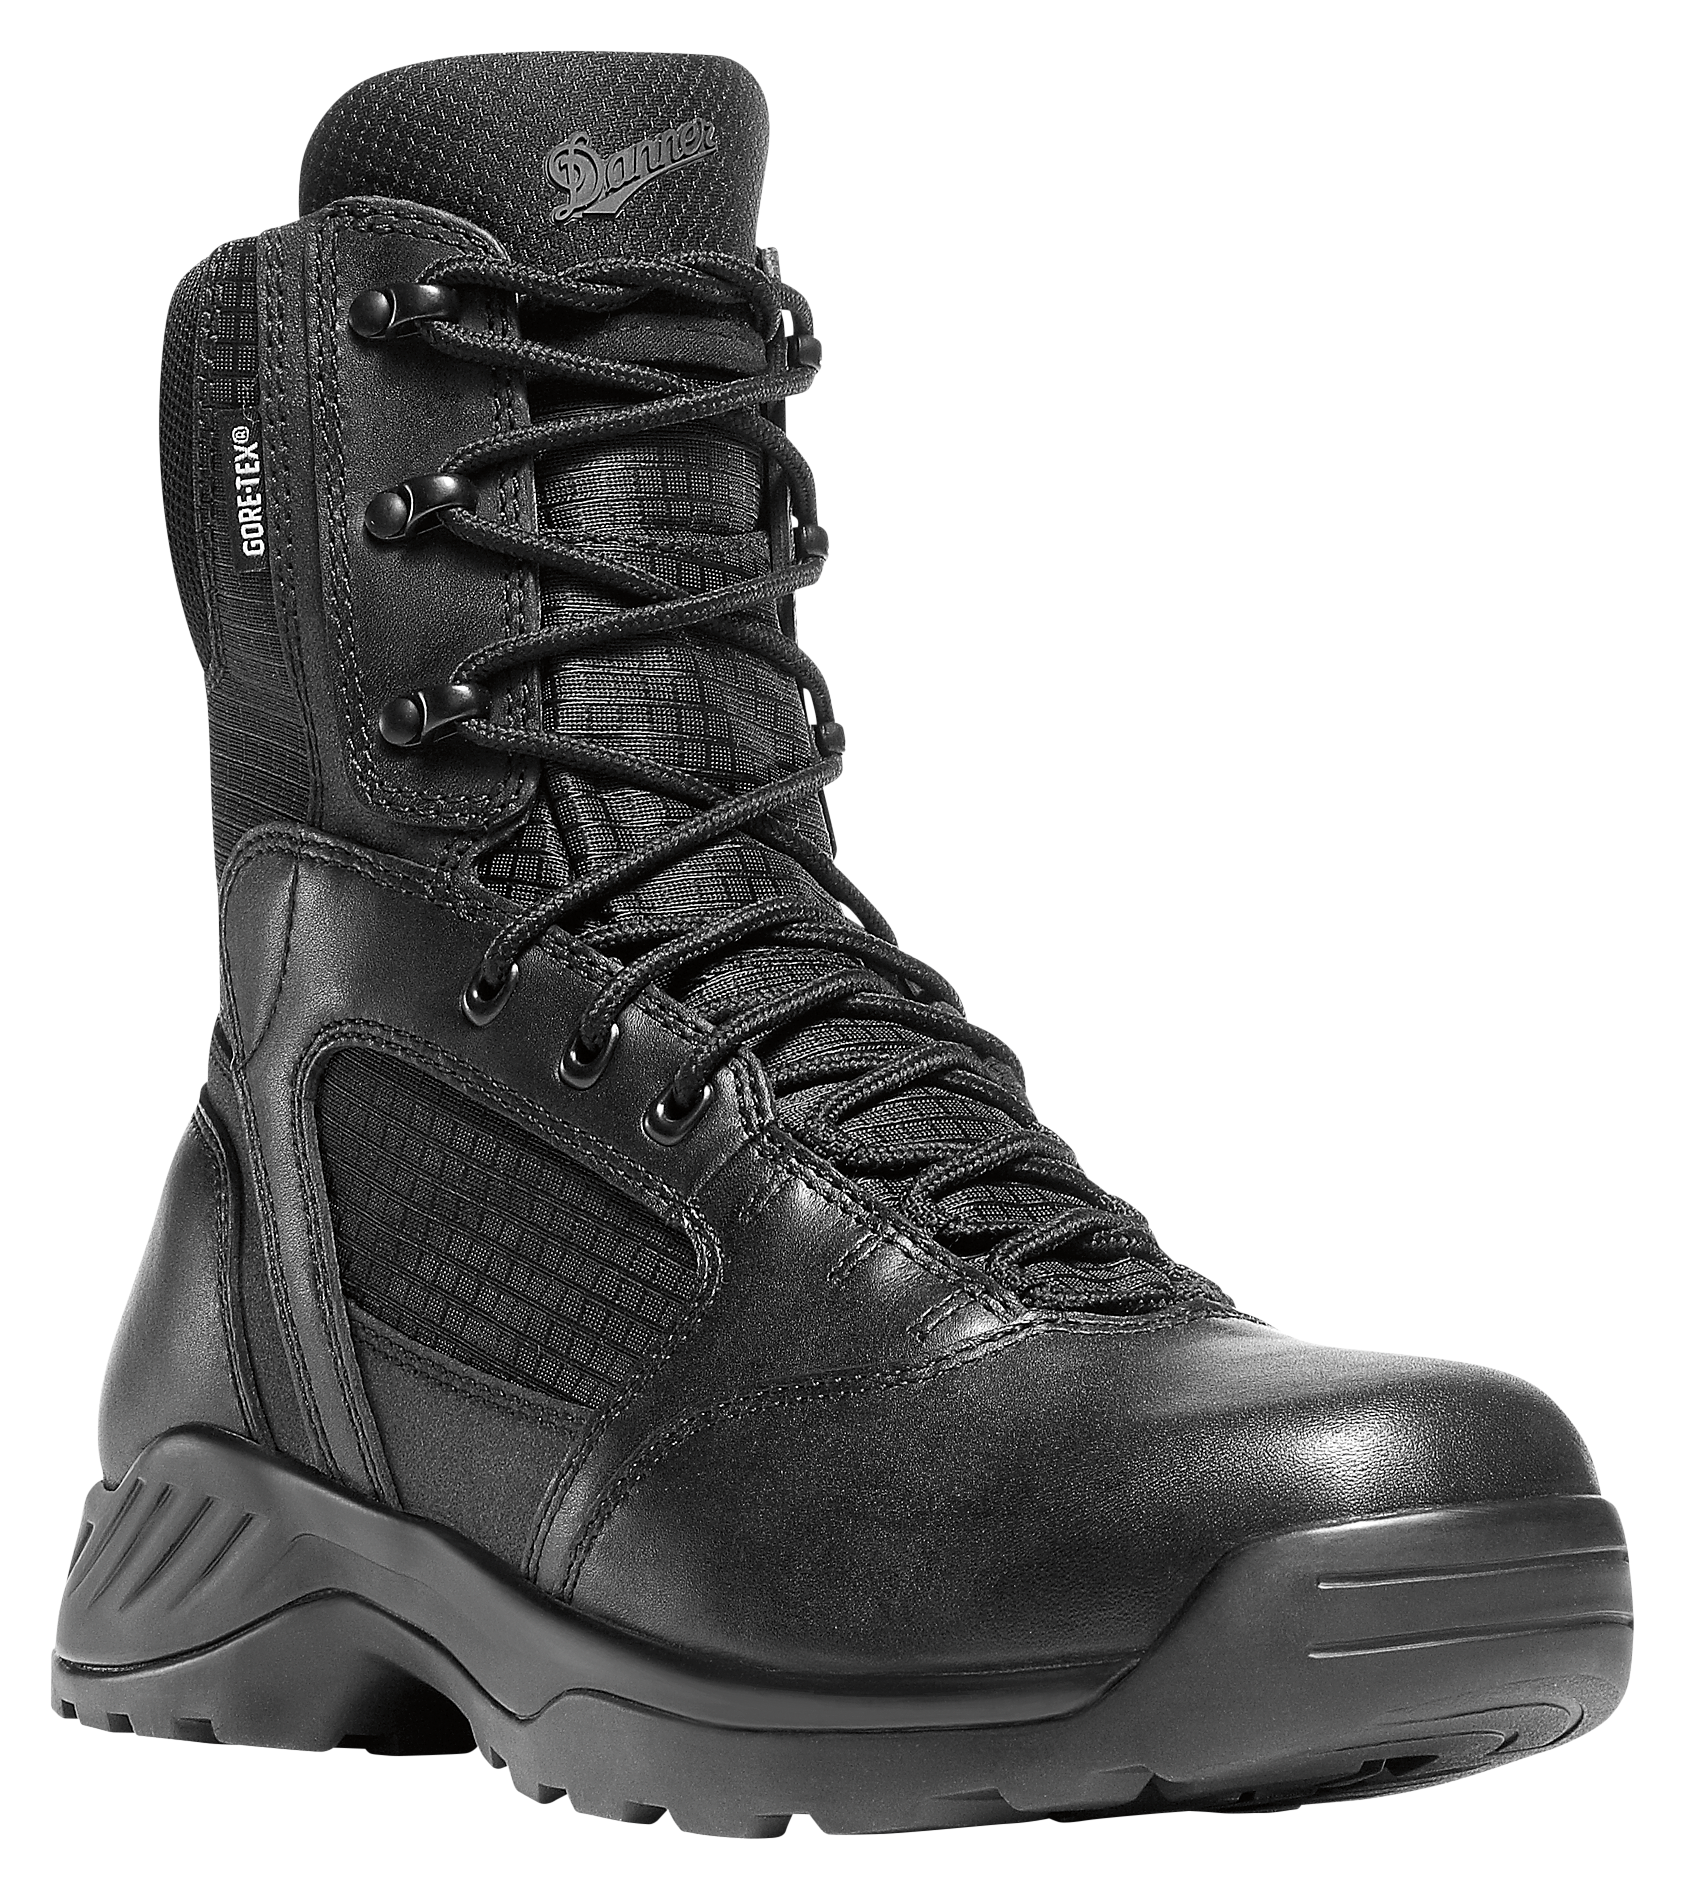 Danner Kinetic GTX Side-Zip Waterproof Tactical Duty Boots for Men - Black - 9M